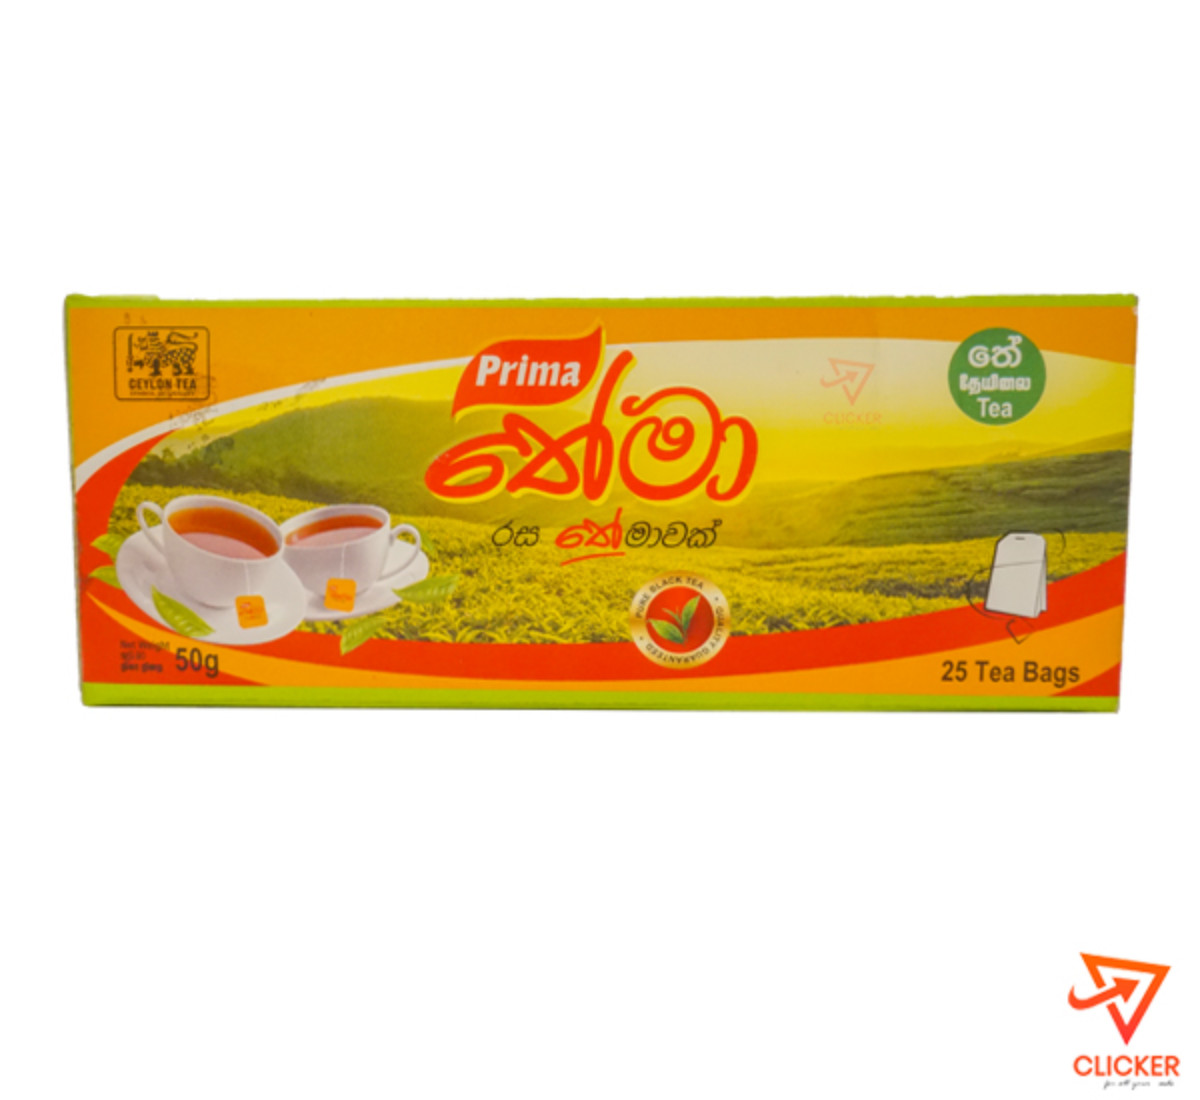 Clicker product 50g PRIMA theama tea(25 tea bags) 957